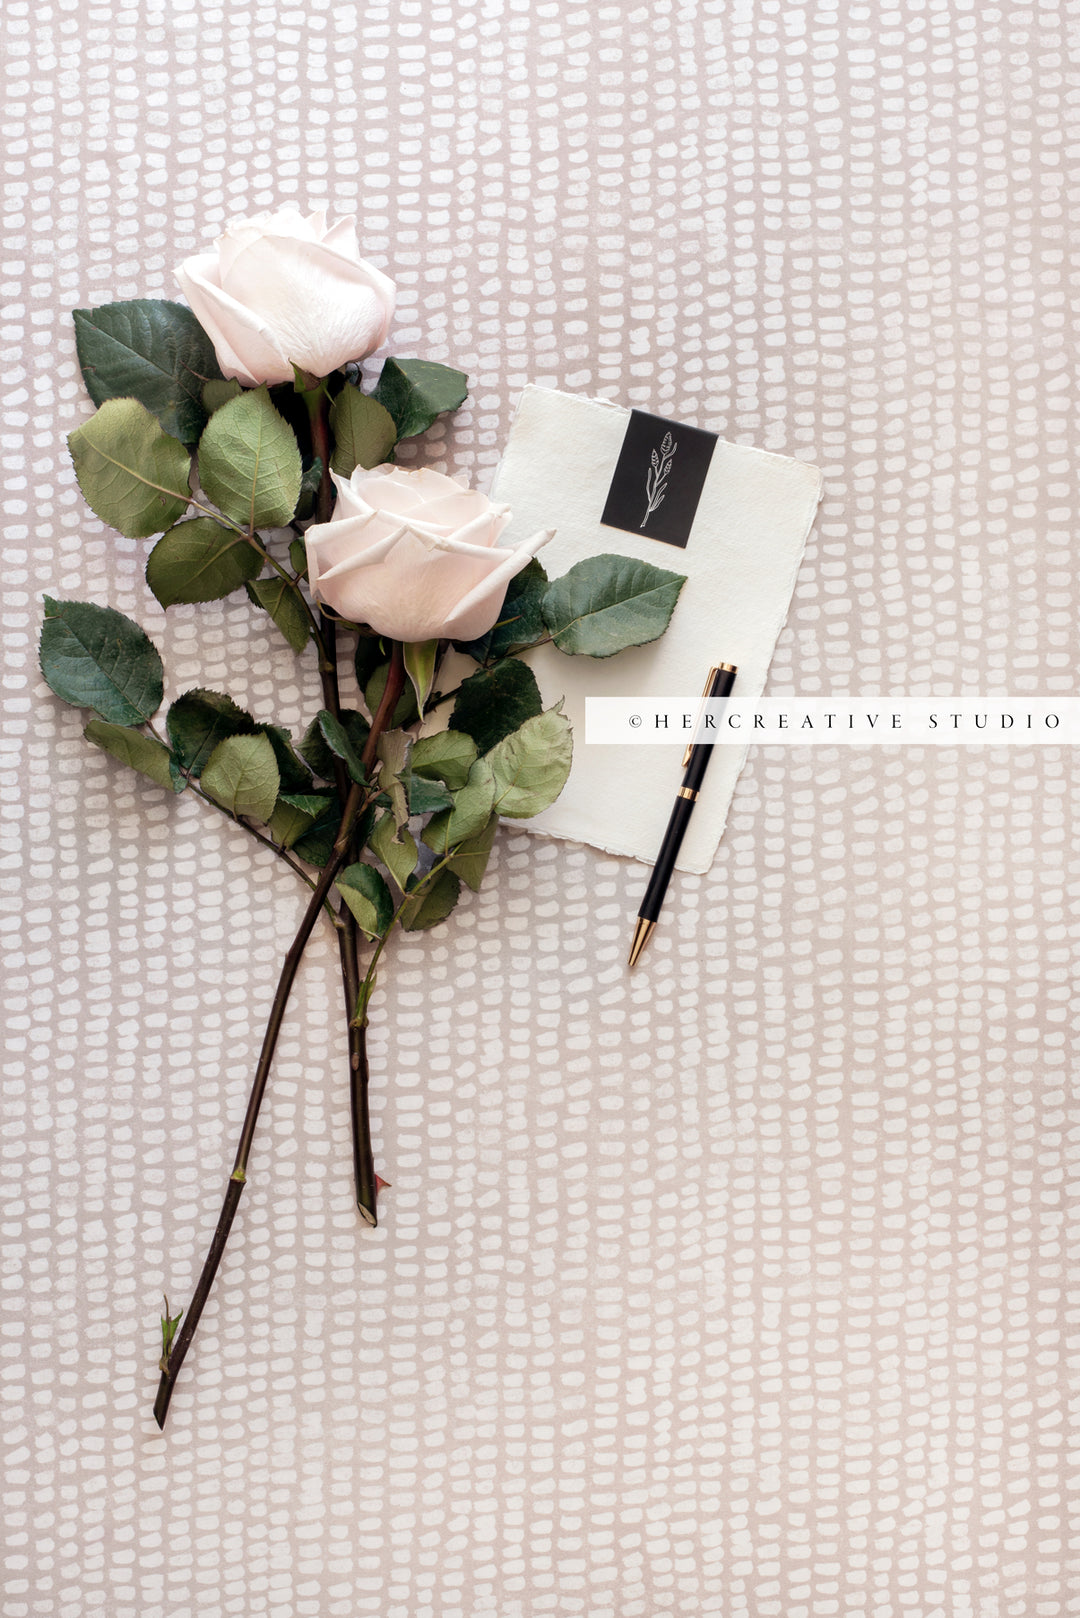 Roses & Notepaper on Patterned Background, Stock Image